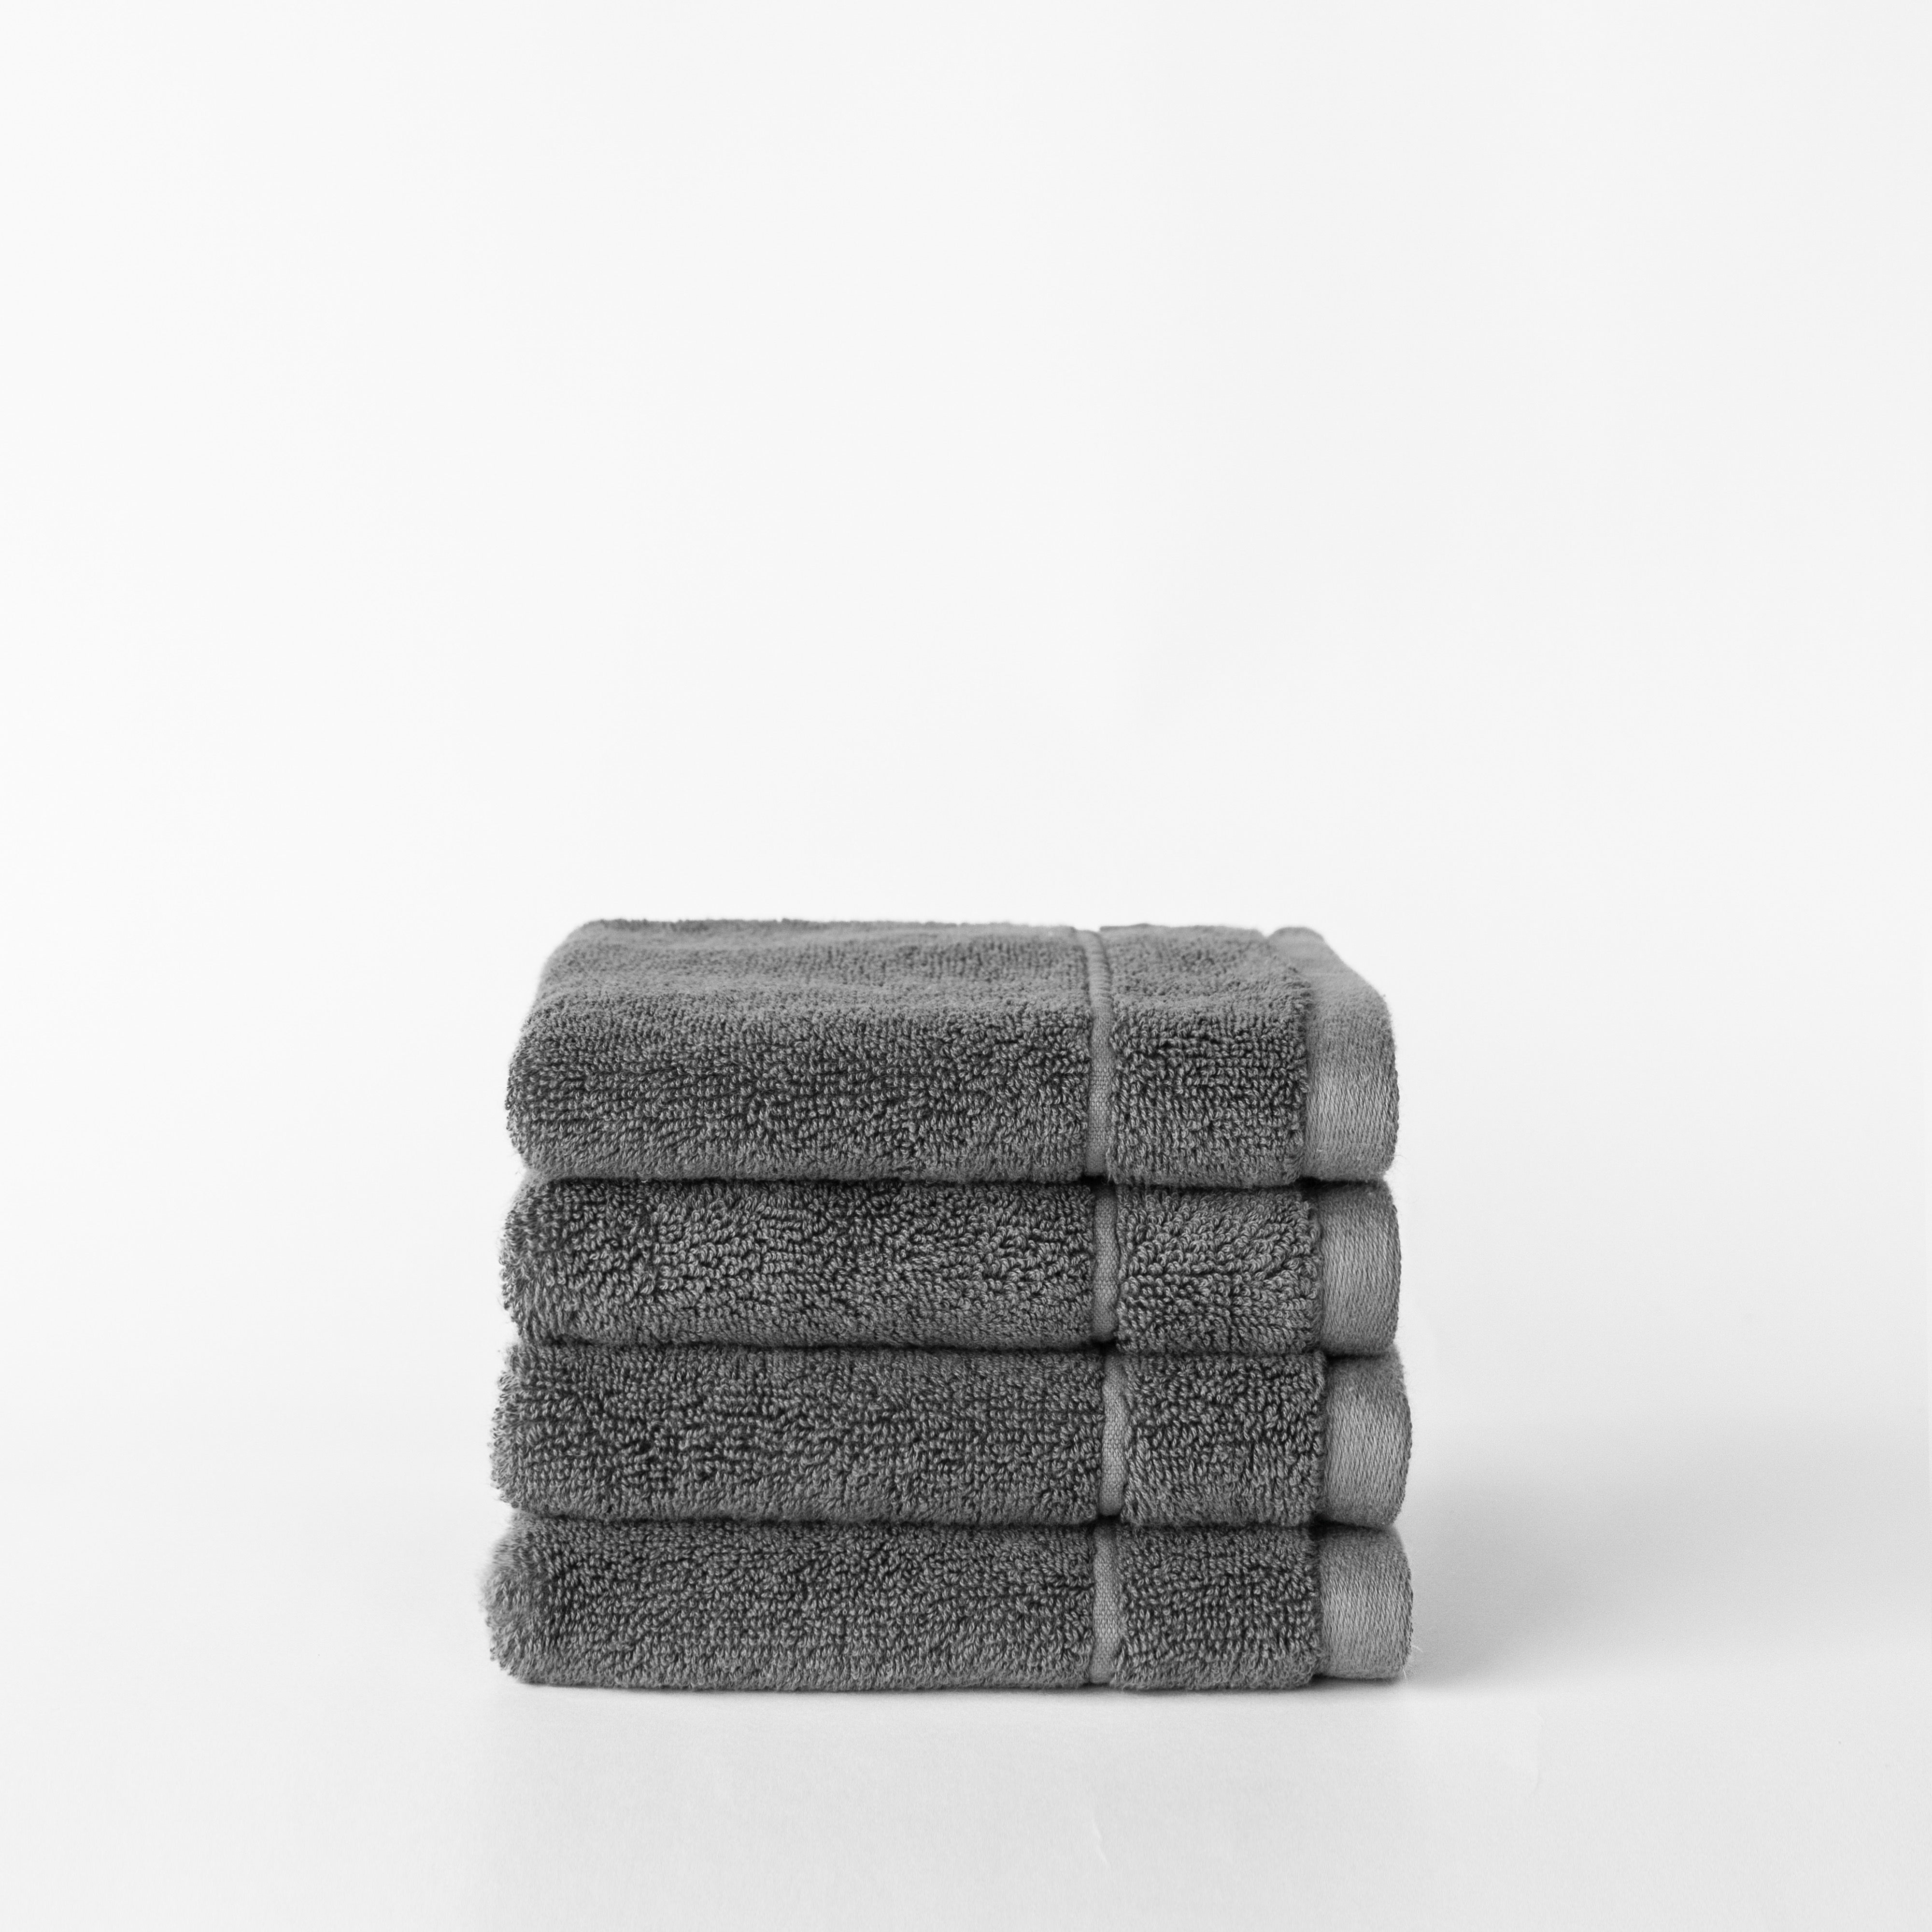 Charcoal Premium Plush Wash Cloths. Photo of Premium Plush Wash Cloths taken with white background |Color: Charcoal 